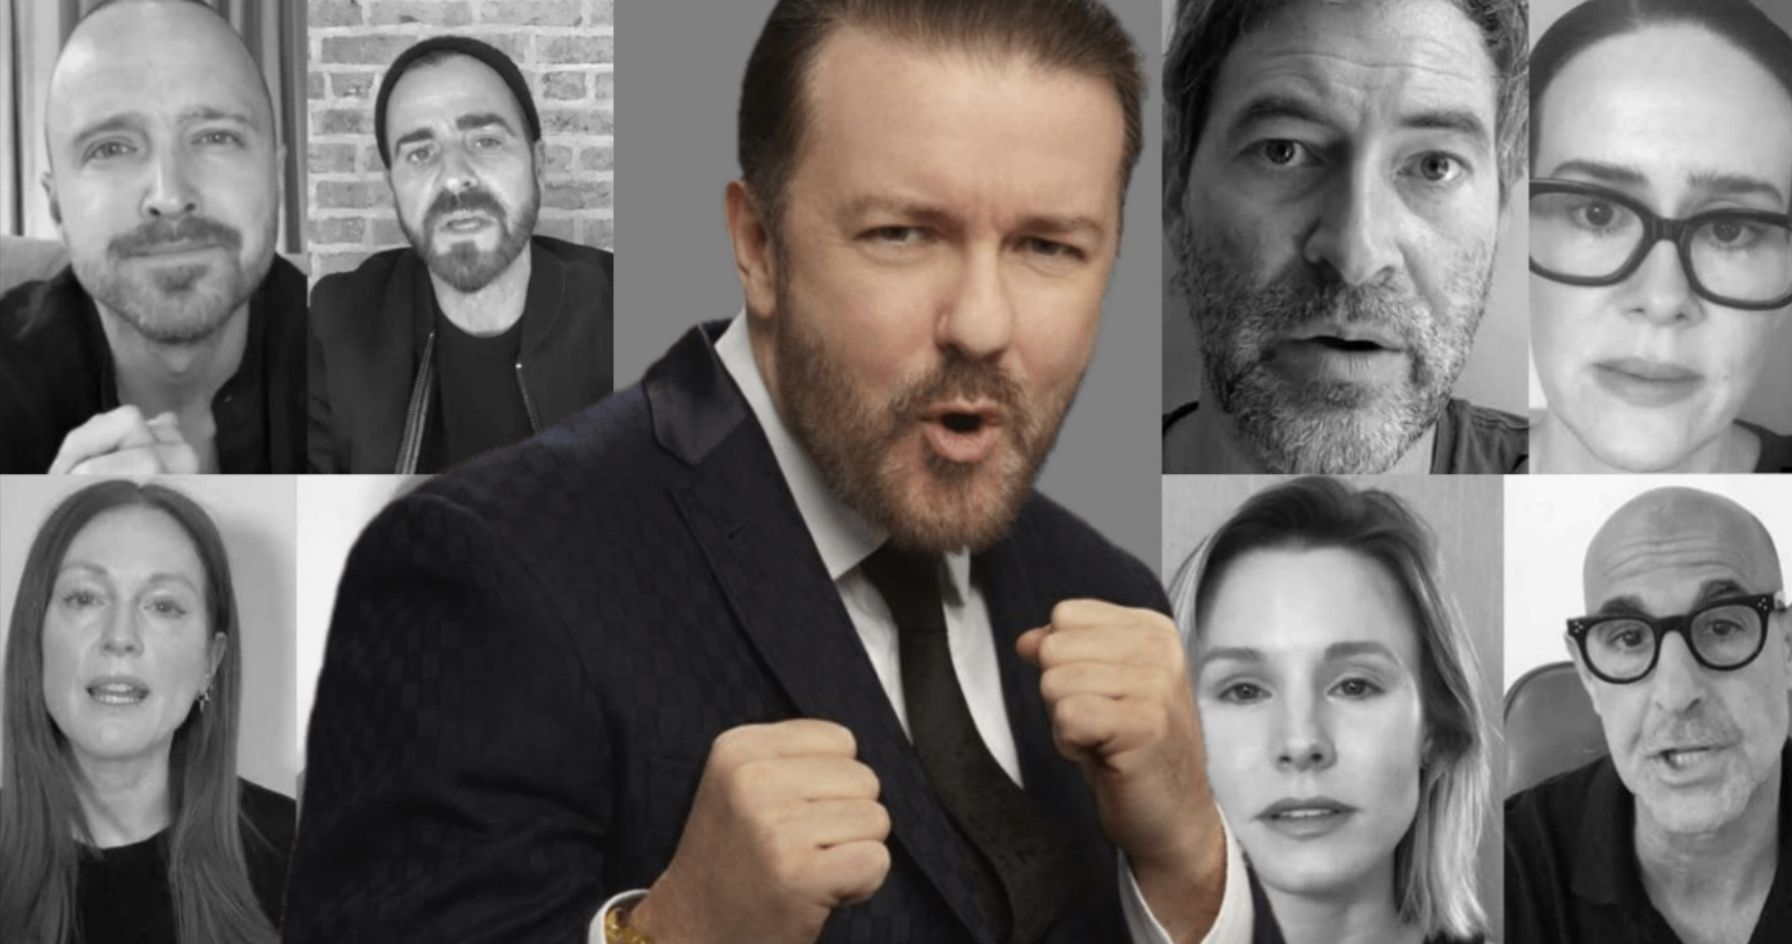 Ricky Gervais Zings Celebrity PSA Video on Racism